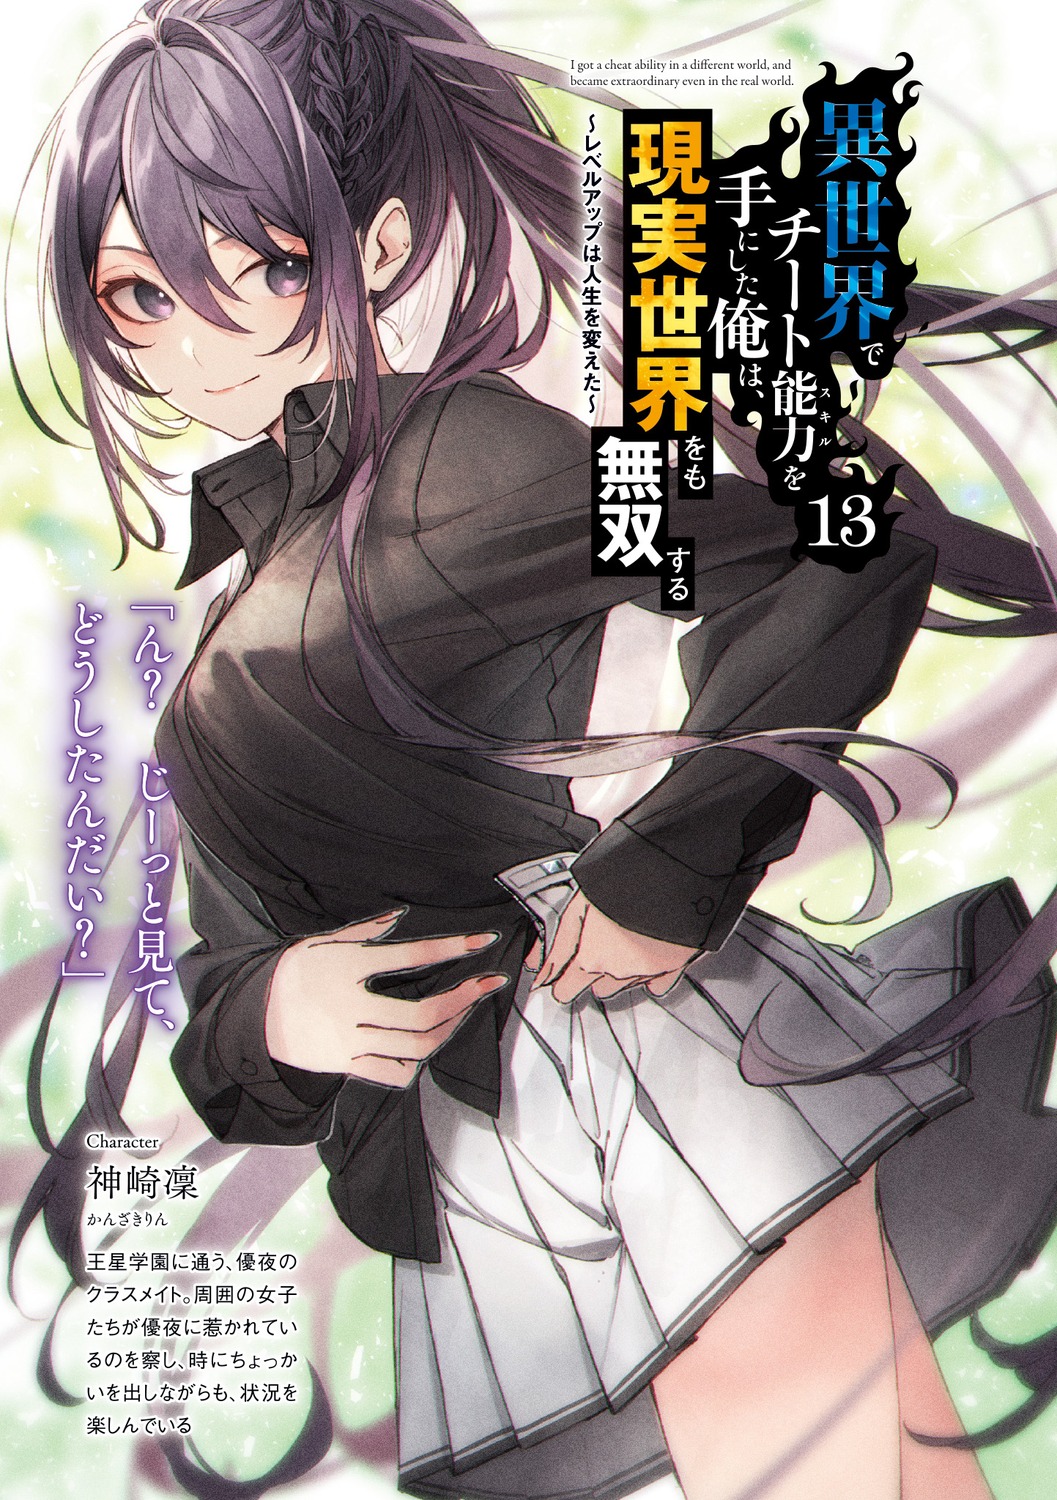 Light Novel Volume 4, Cheat Musou Wiki